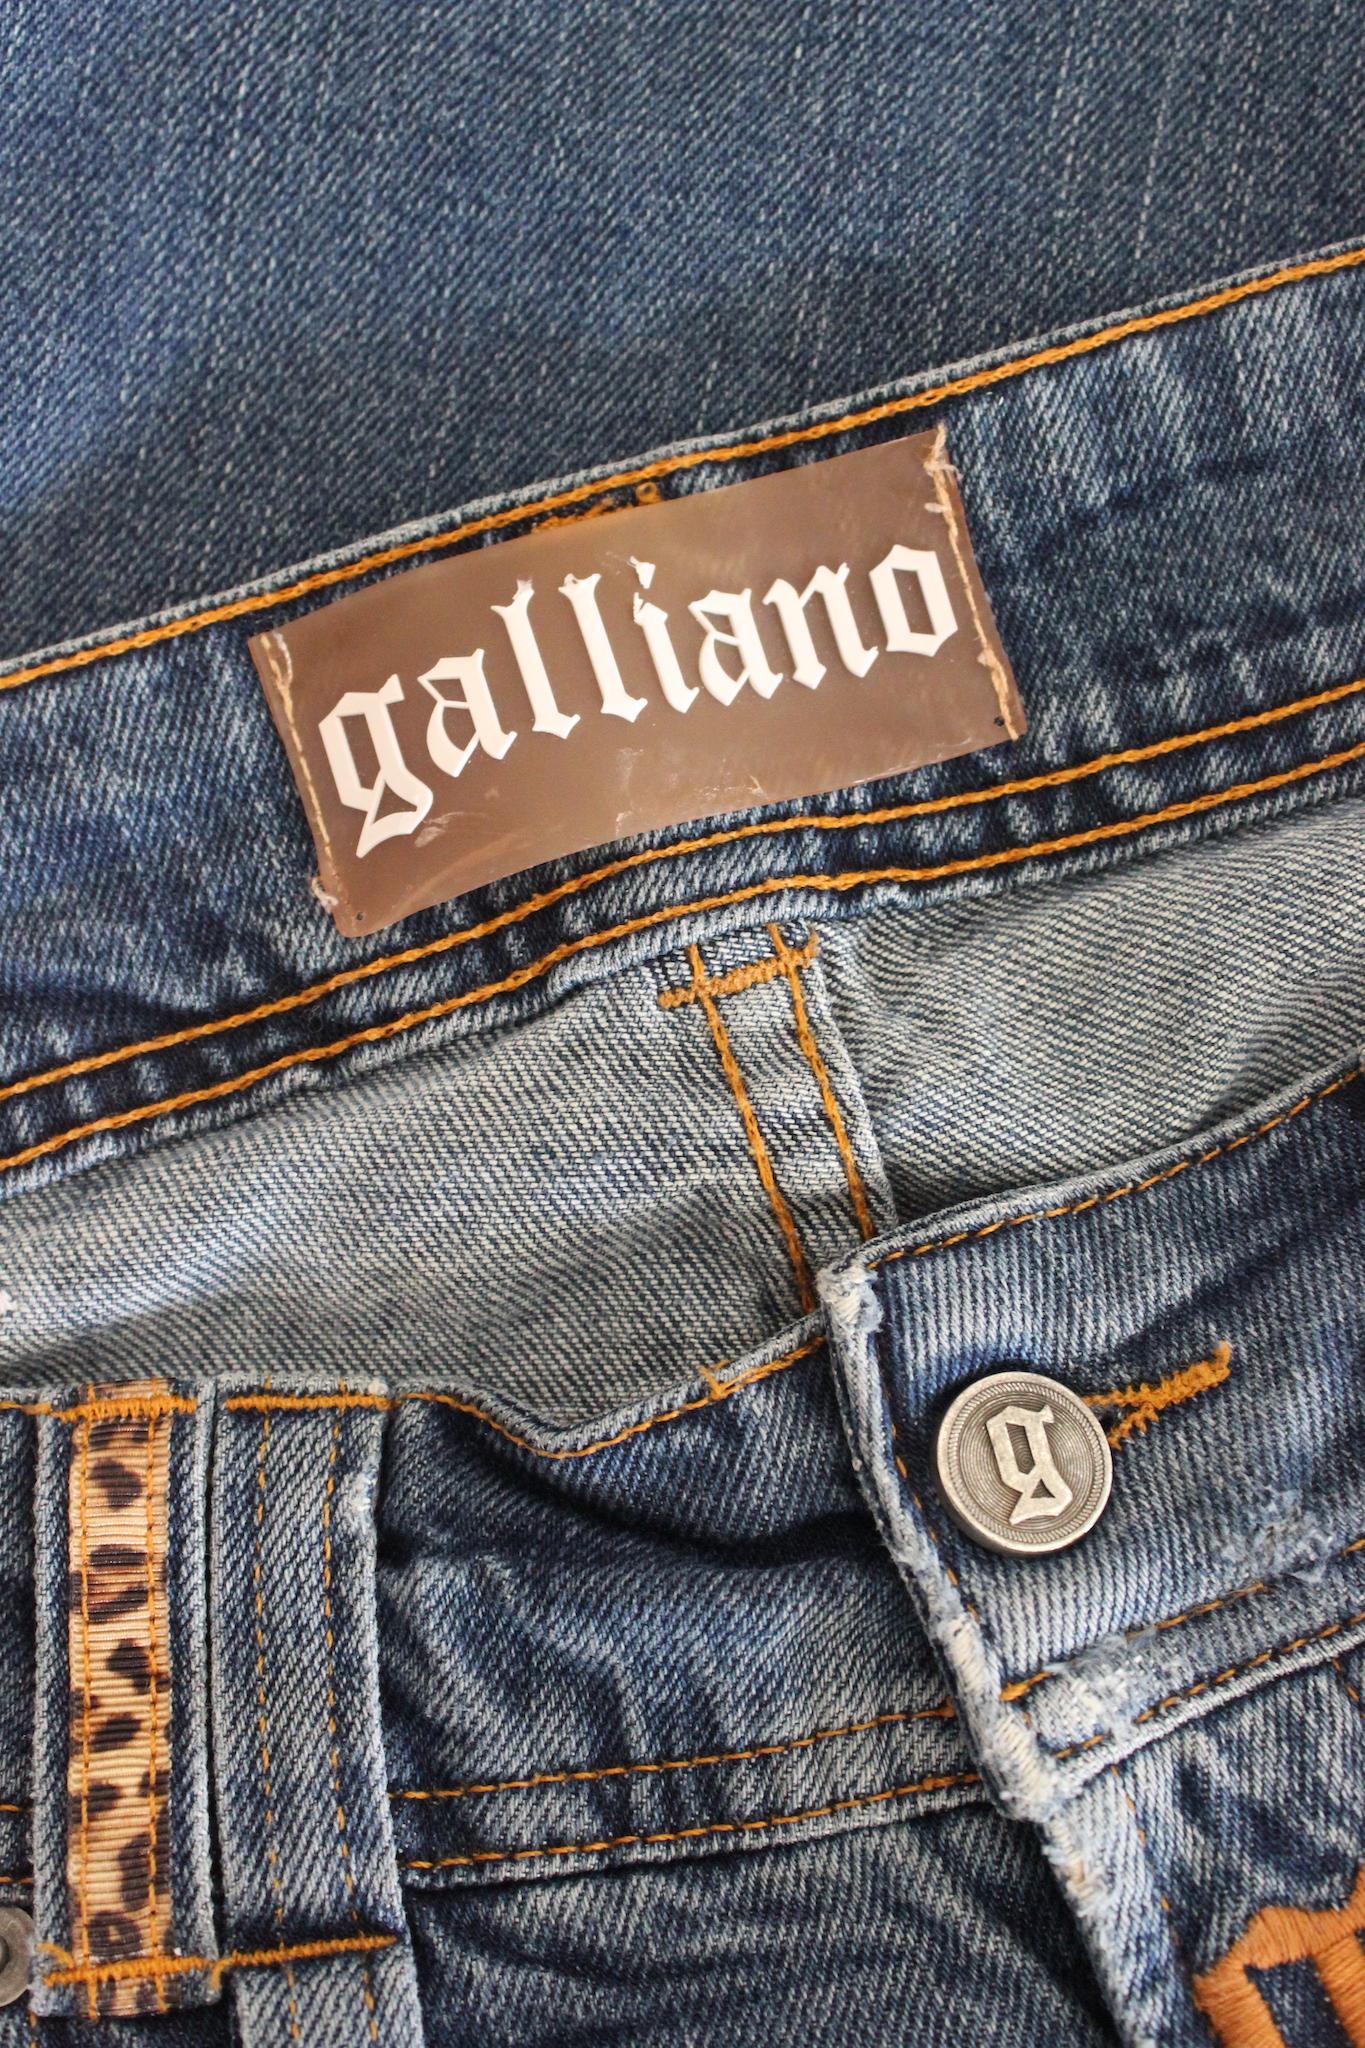 John Galliano vintage 2000s jeans. Blue color, straight pattern, ankle length. 80% cotton, 12% lyocel, 8% elastane fabric. Made in italy.

Size: 42 It 8 Us 10 Uk

Waist: 37 cm
Length: 107 cm
Internal length: 90 cm
Hem: 18 cm